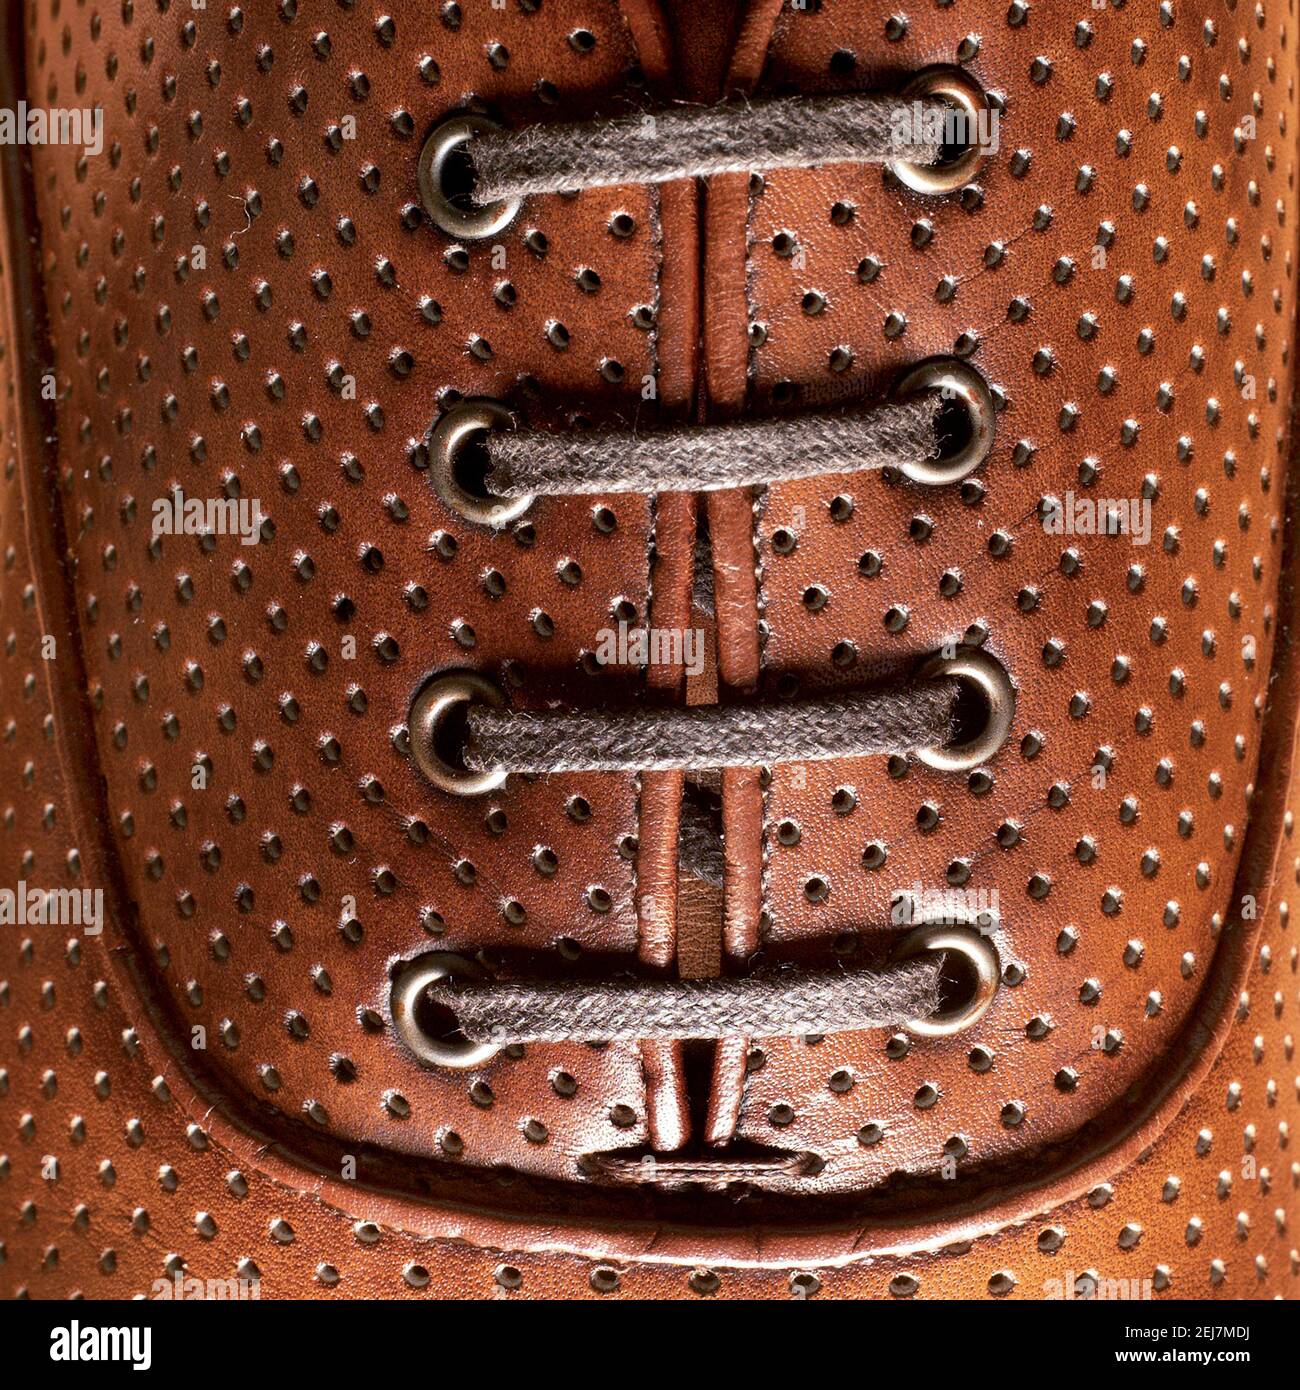 Hand-built leather men's shoe close-up detailed studio shot. Stock Photo